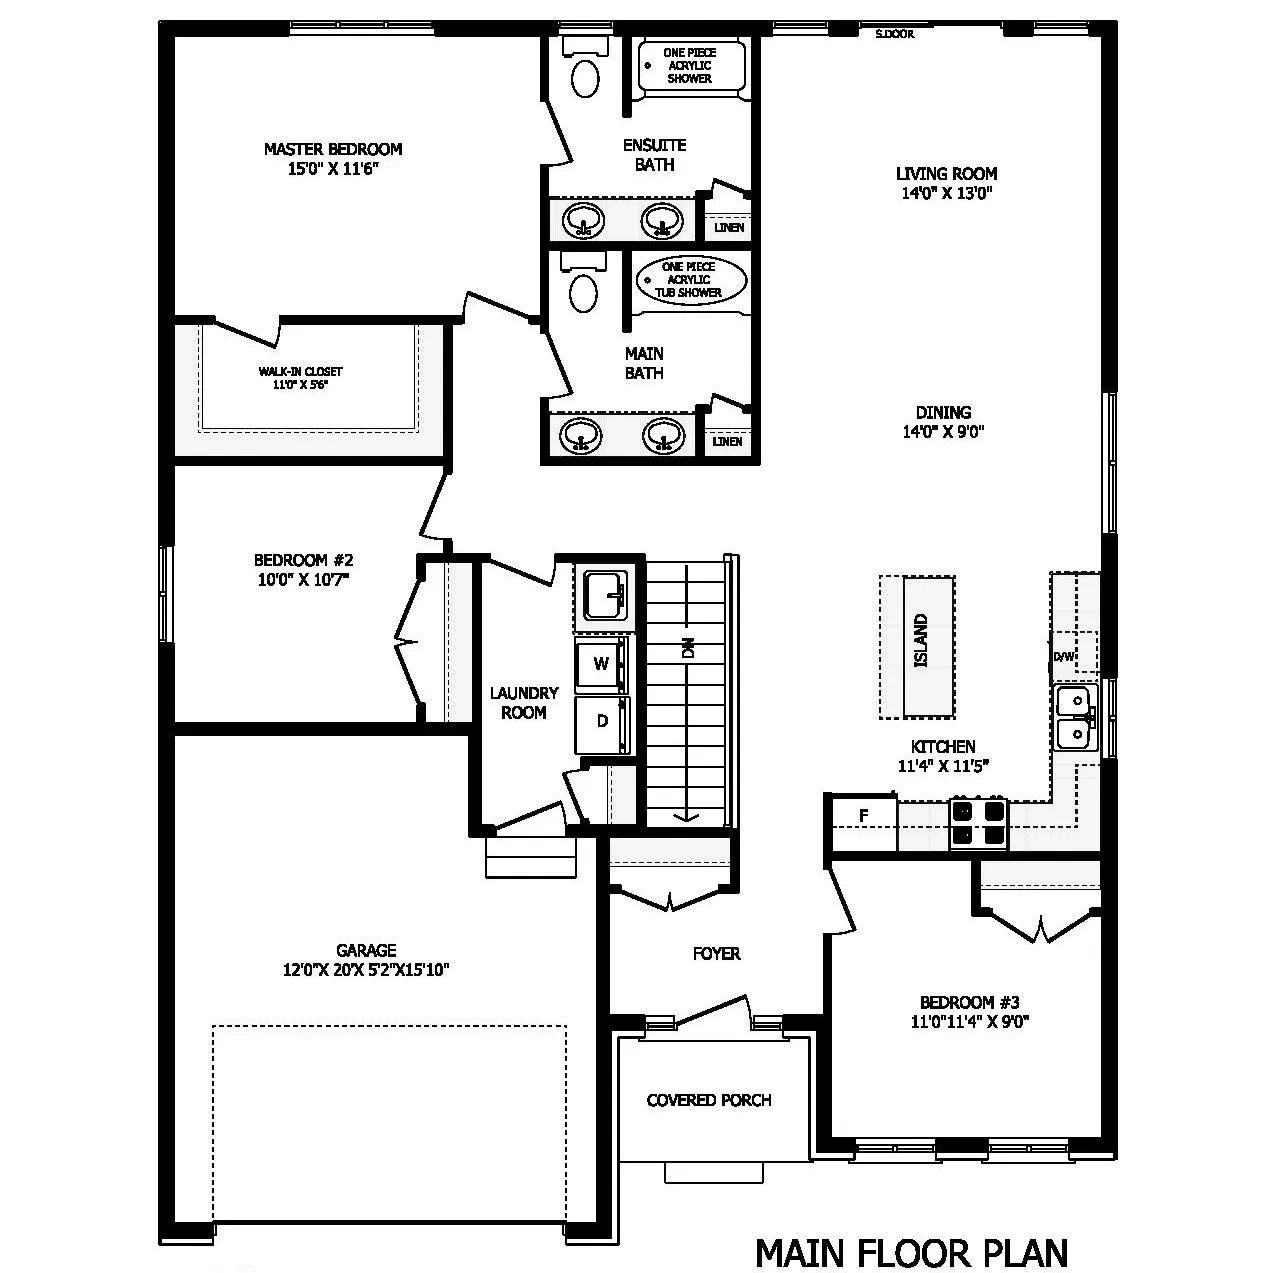 The Muskoka Main Floor Plan
Greenwood Landings
New Homes in Coldwater